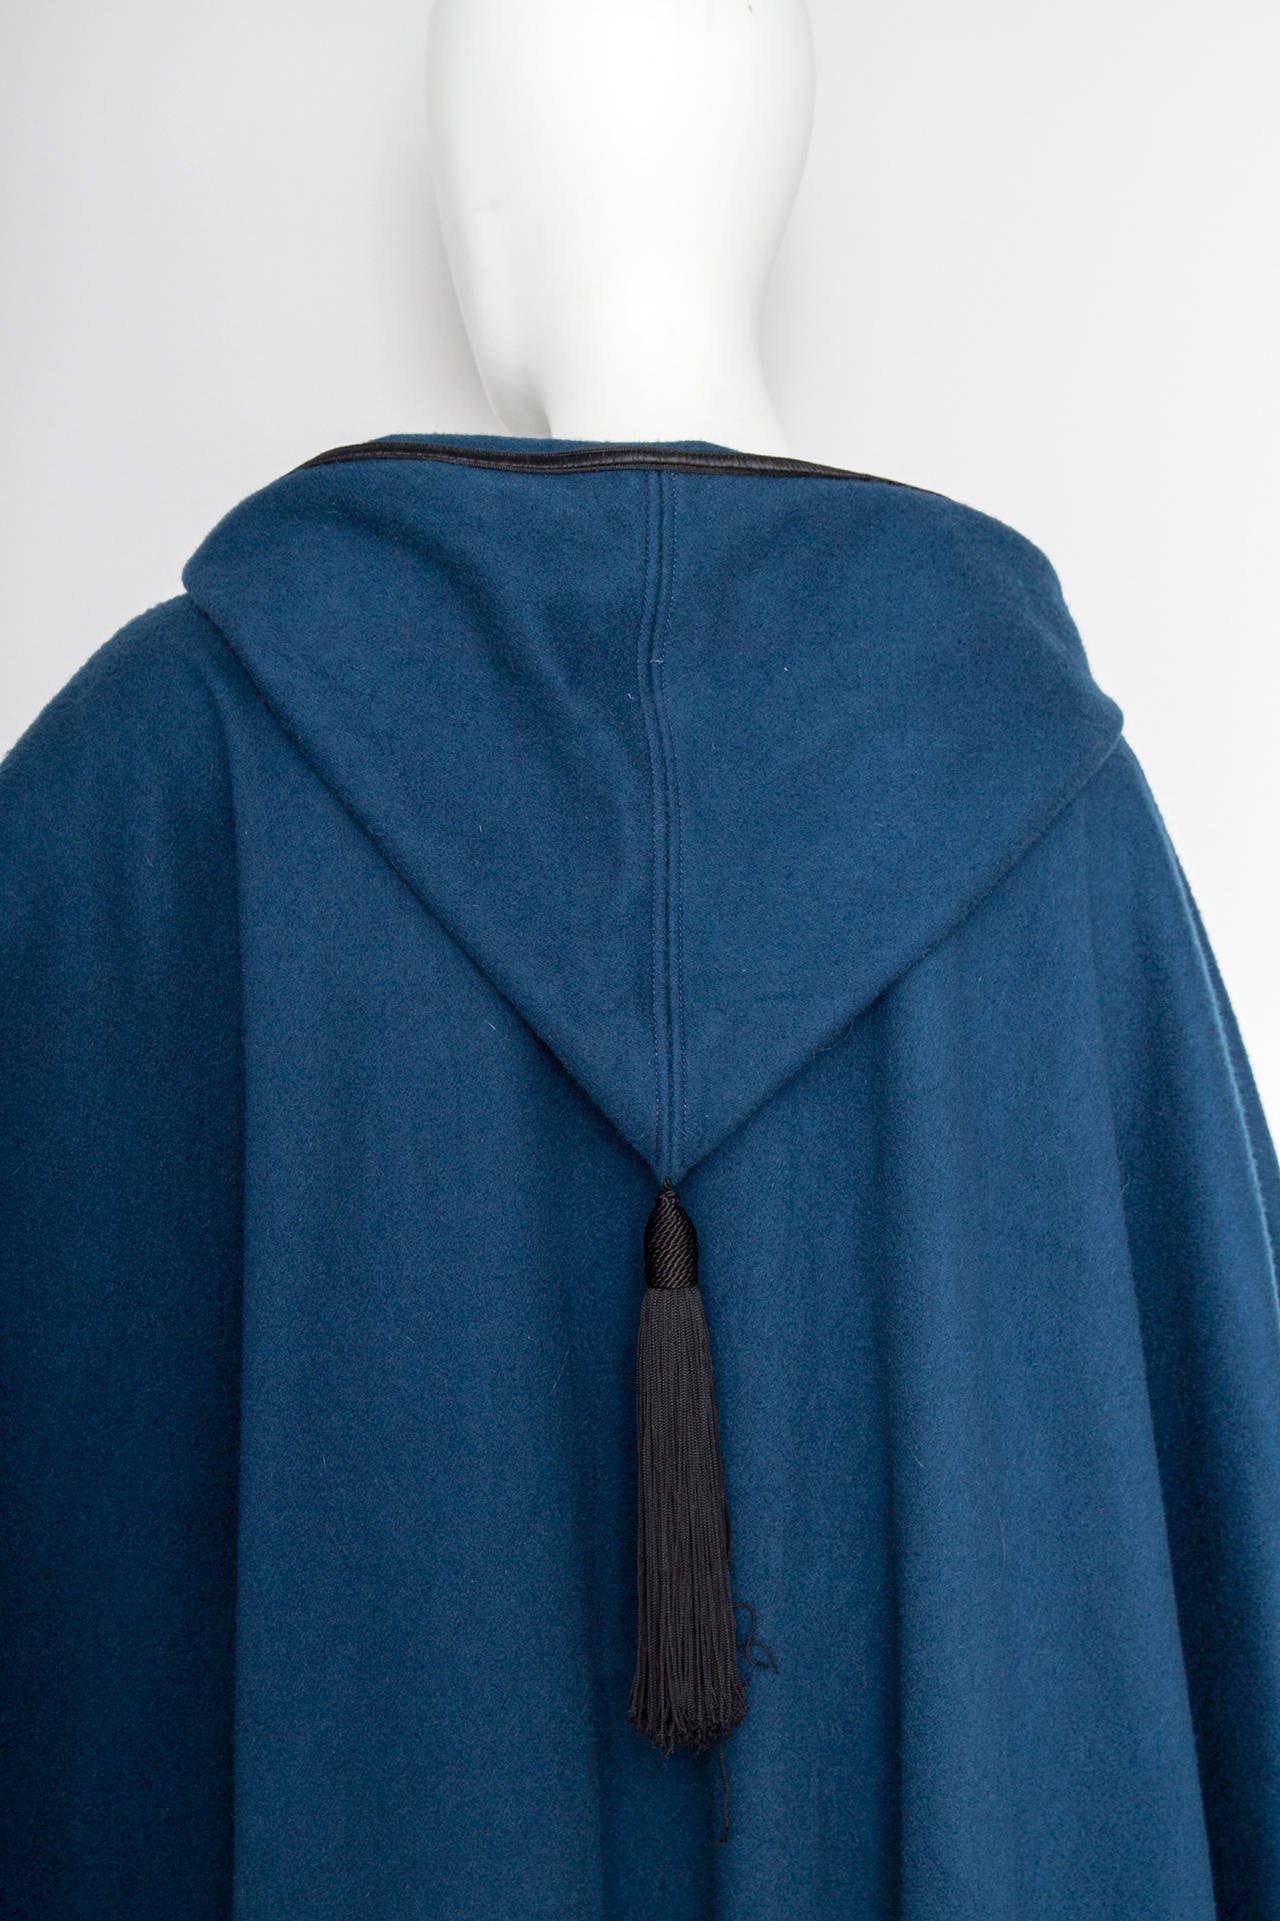 1970s Yves Saint Laurent Rive Gauche Teal Blue Wool Cape 3